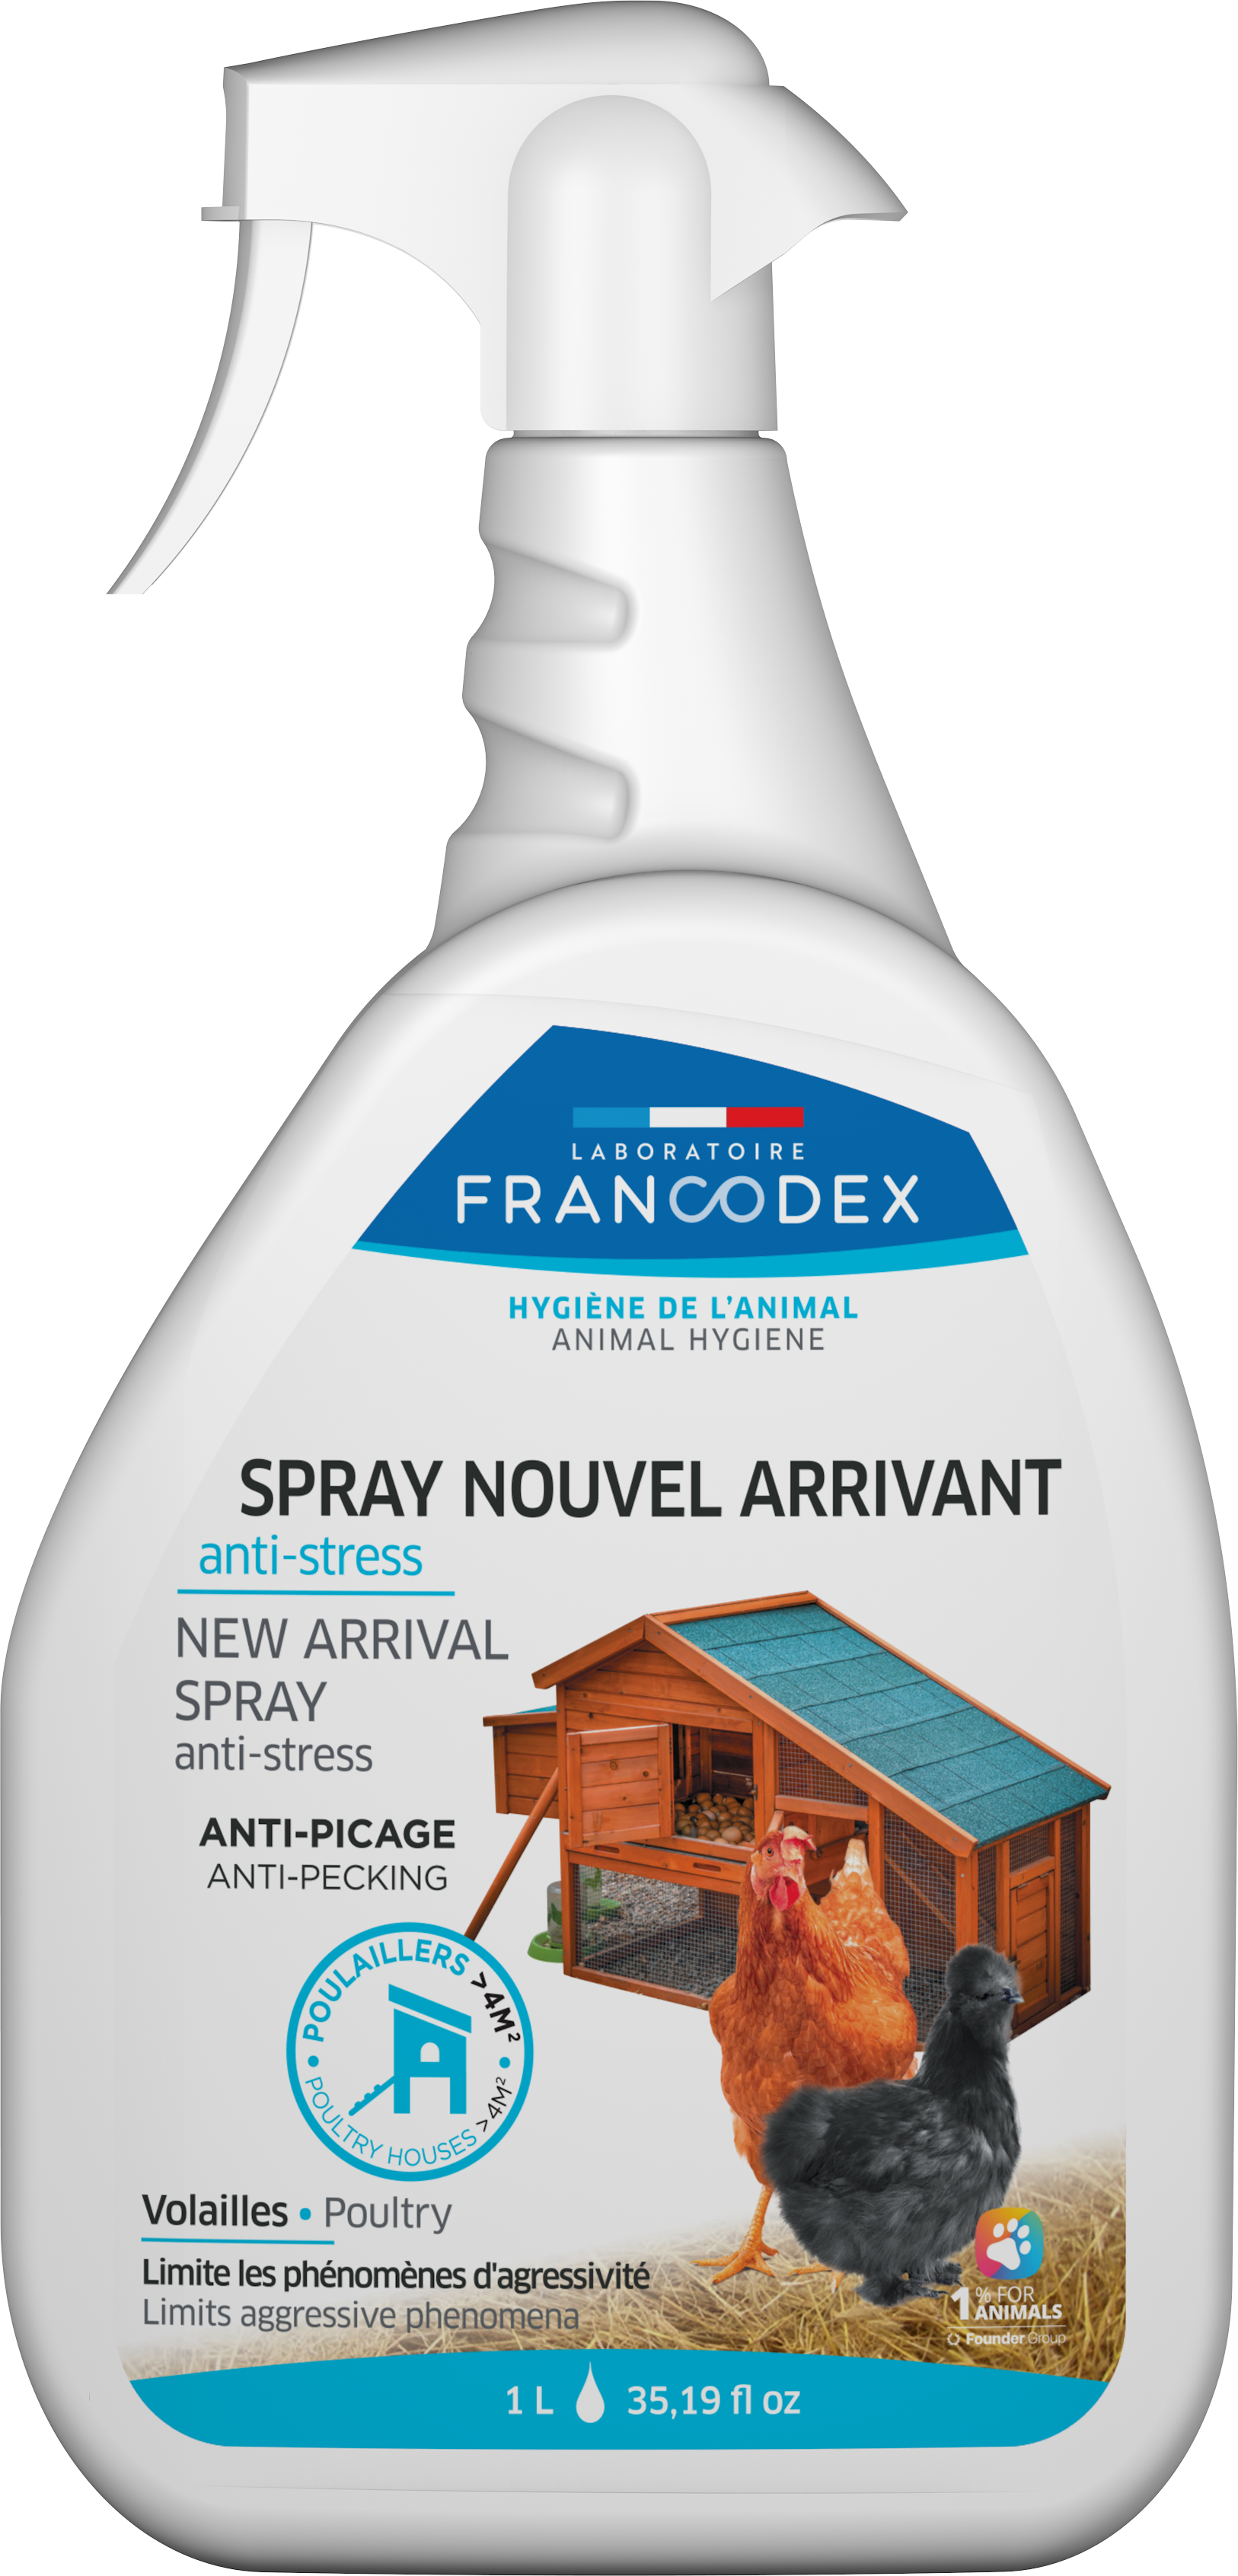 Francodex Spray Neuzugang Anti-Stress